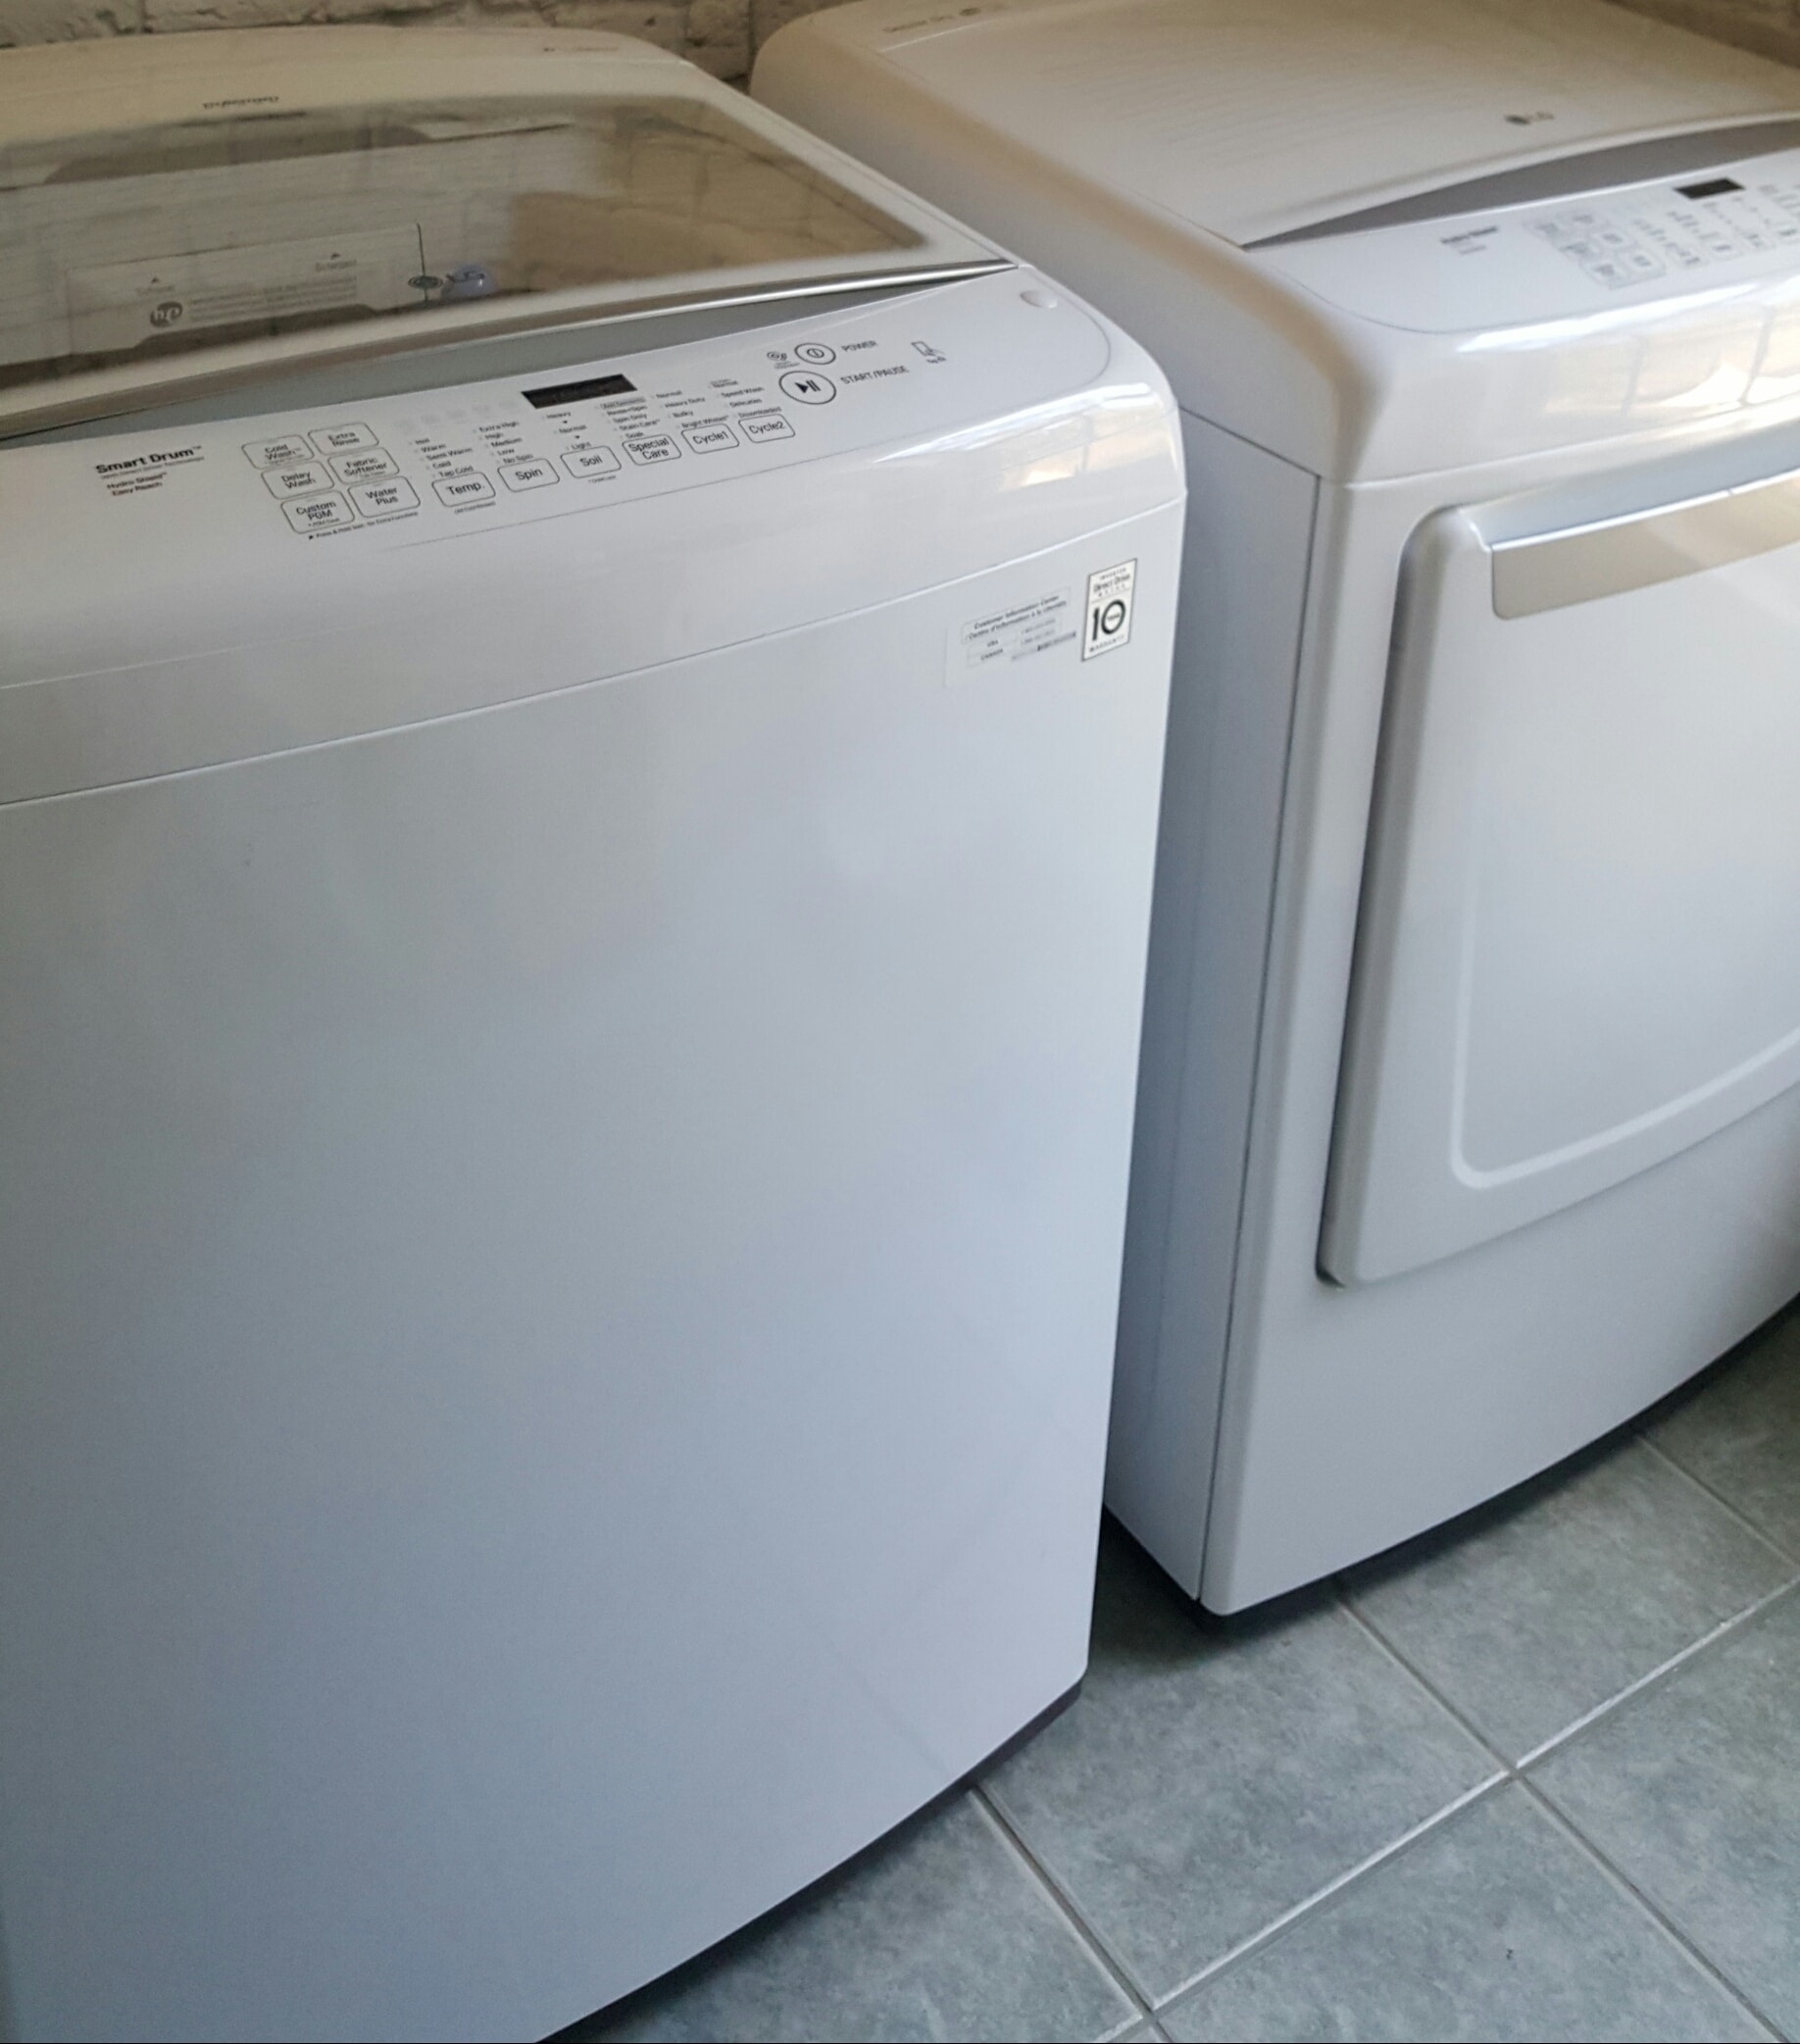 One Room Challenge Laundry Room Makeover LG washing machine dryer